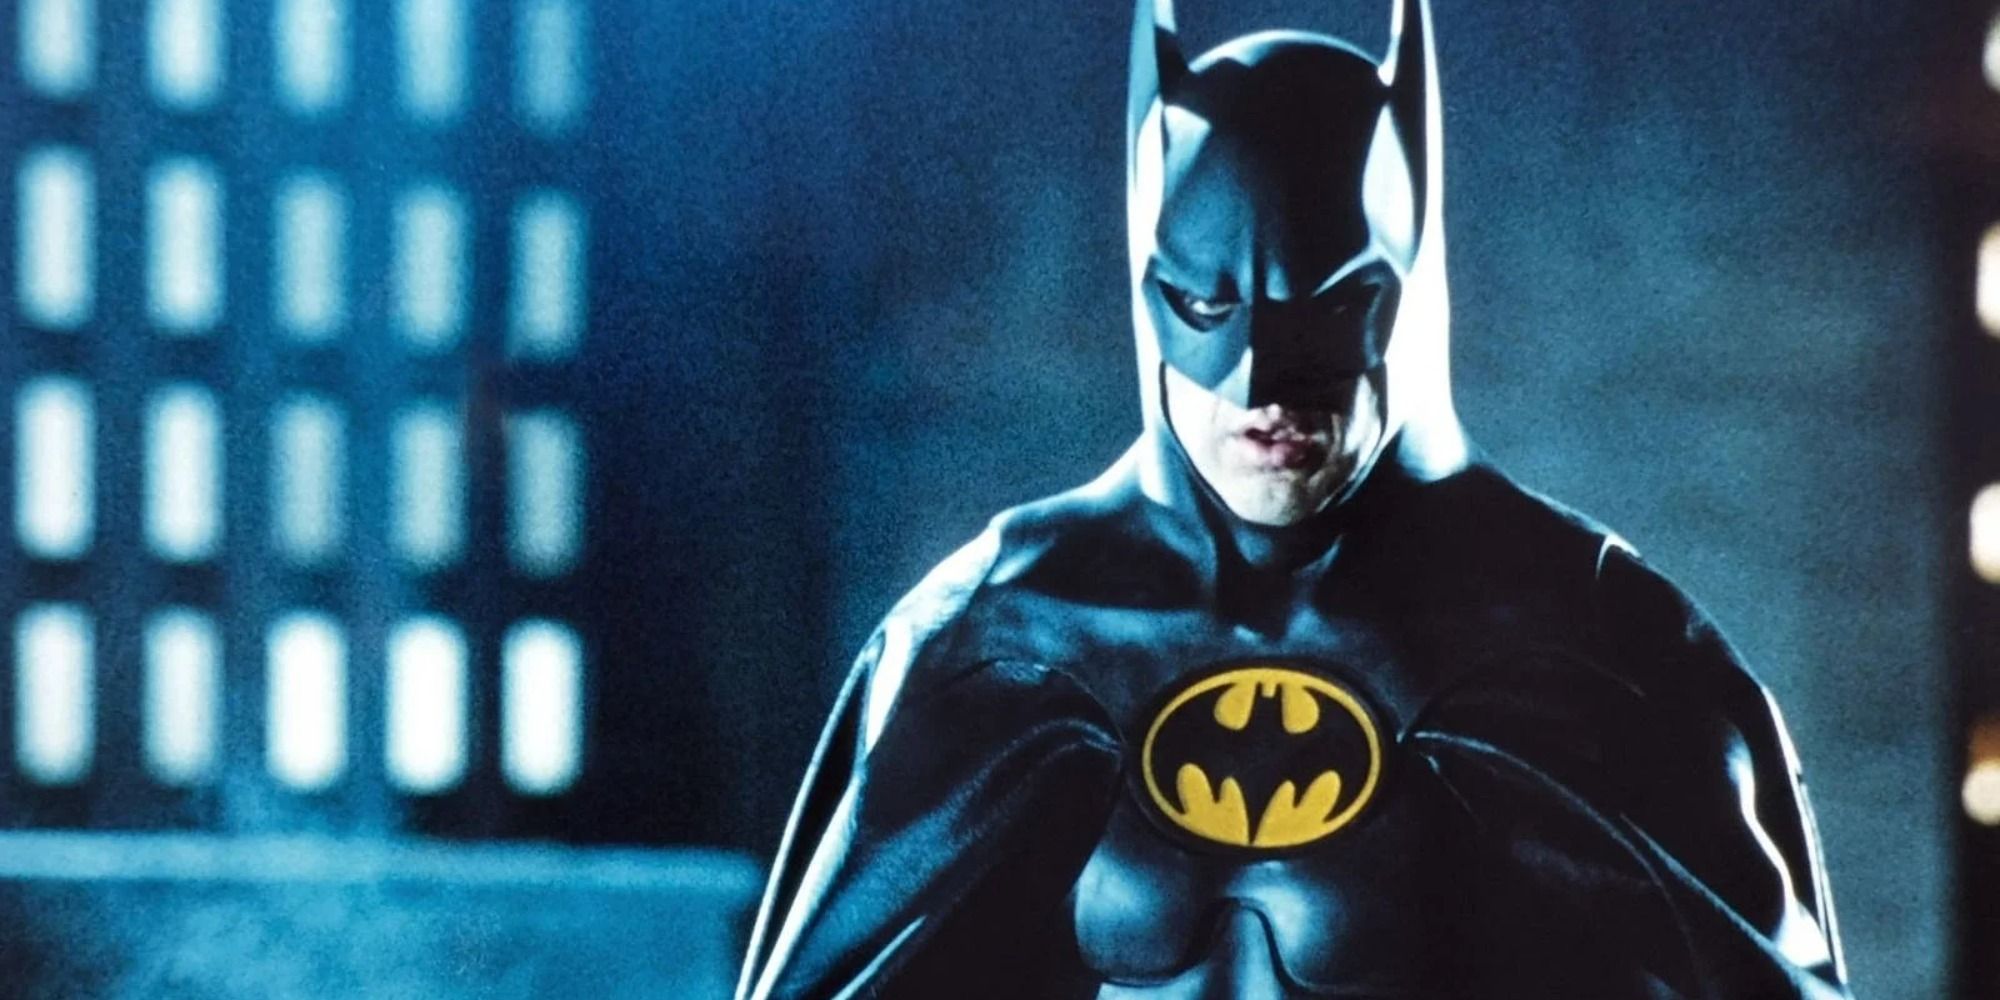 Michael Keaton as Batman watches over Gotham City.